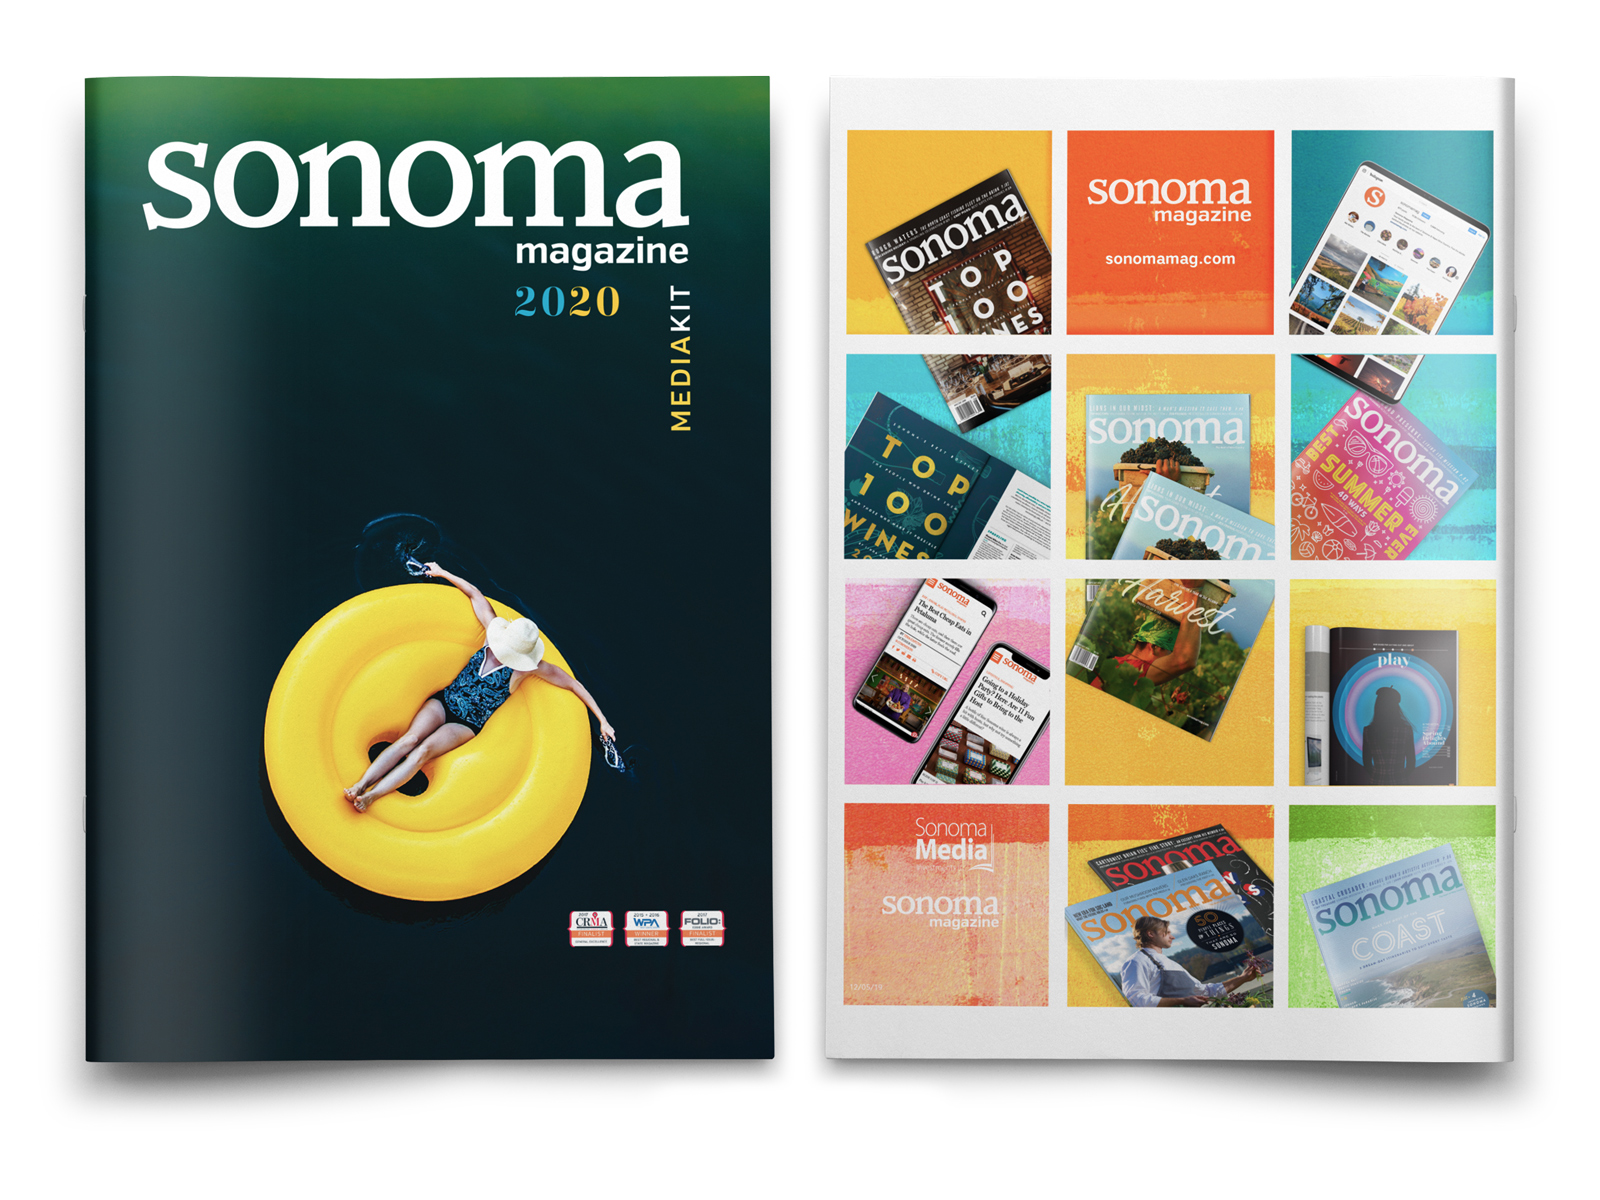 Sonoma Magazine 2020 cover & back